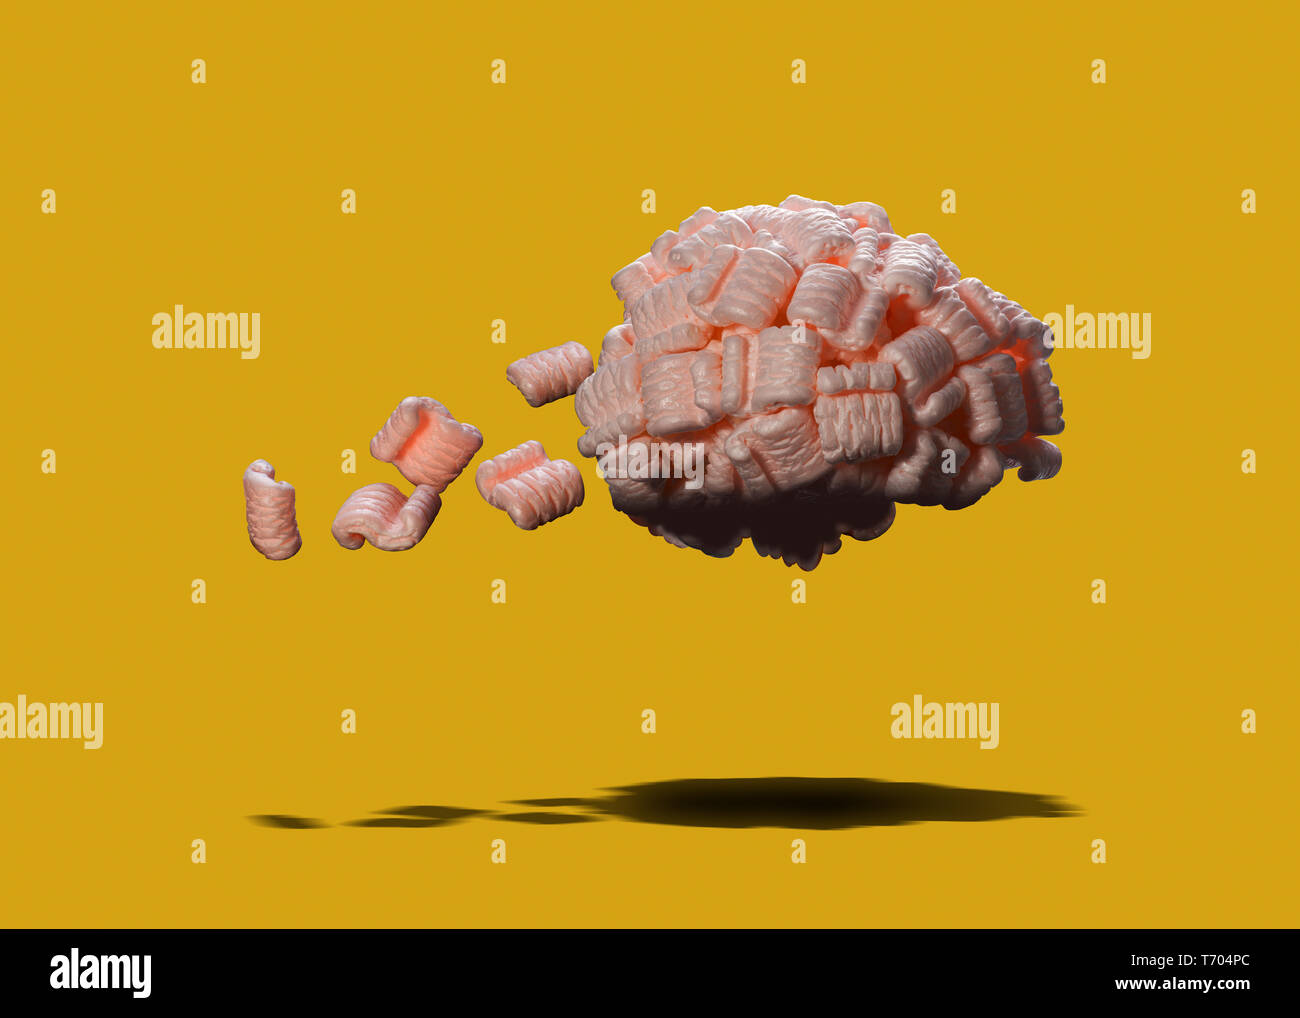 Concept Brain made of Packaging Material losing pieces, Losing,  Memory Loss, Brain Diseases, Brain Damage, Stock Photo